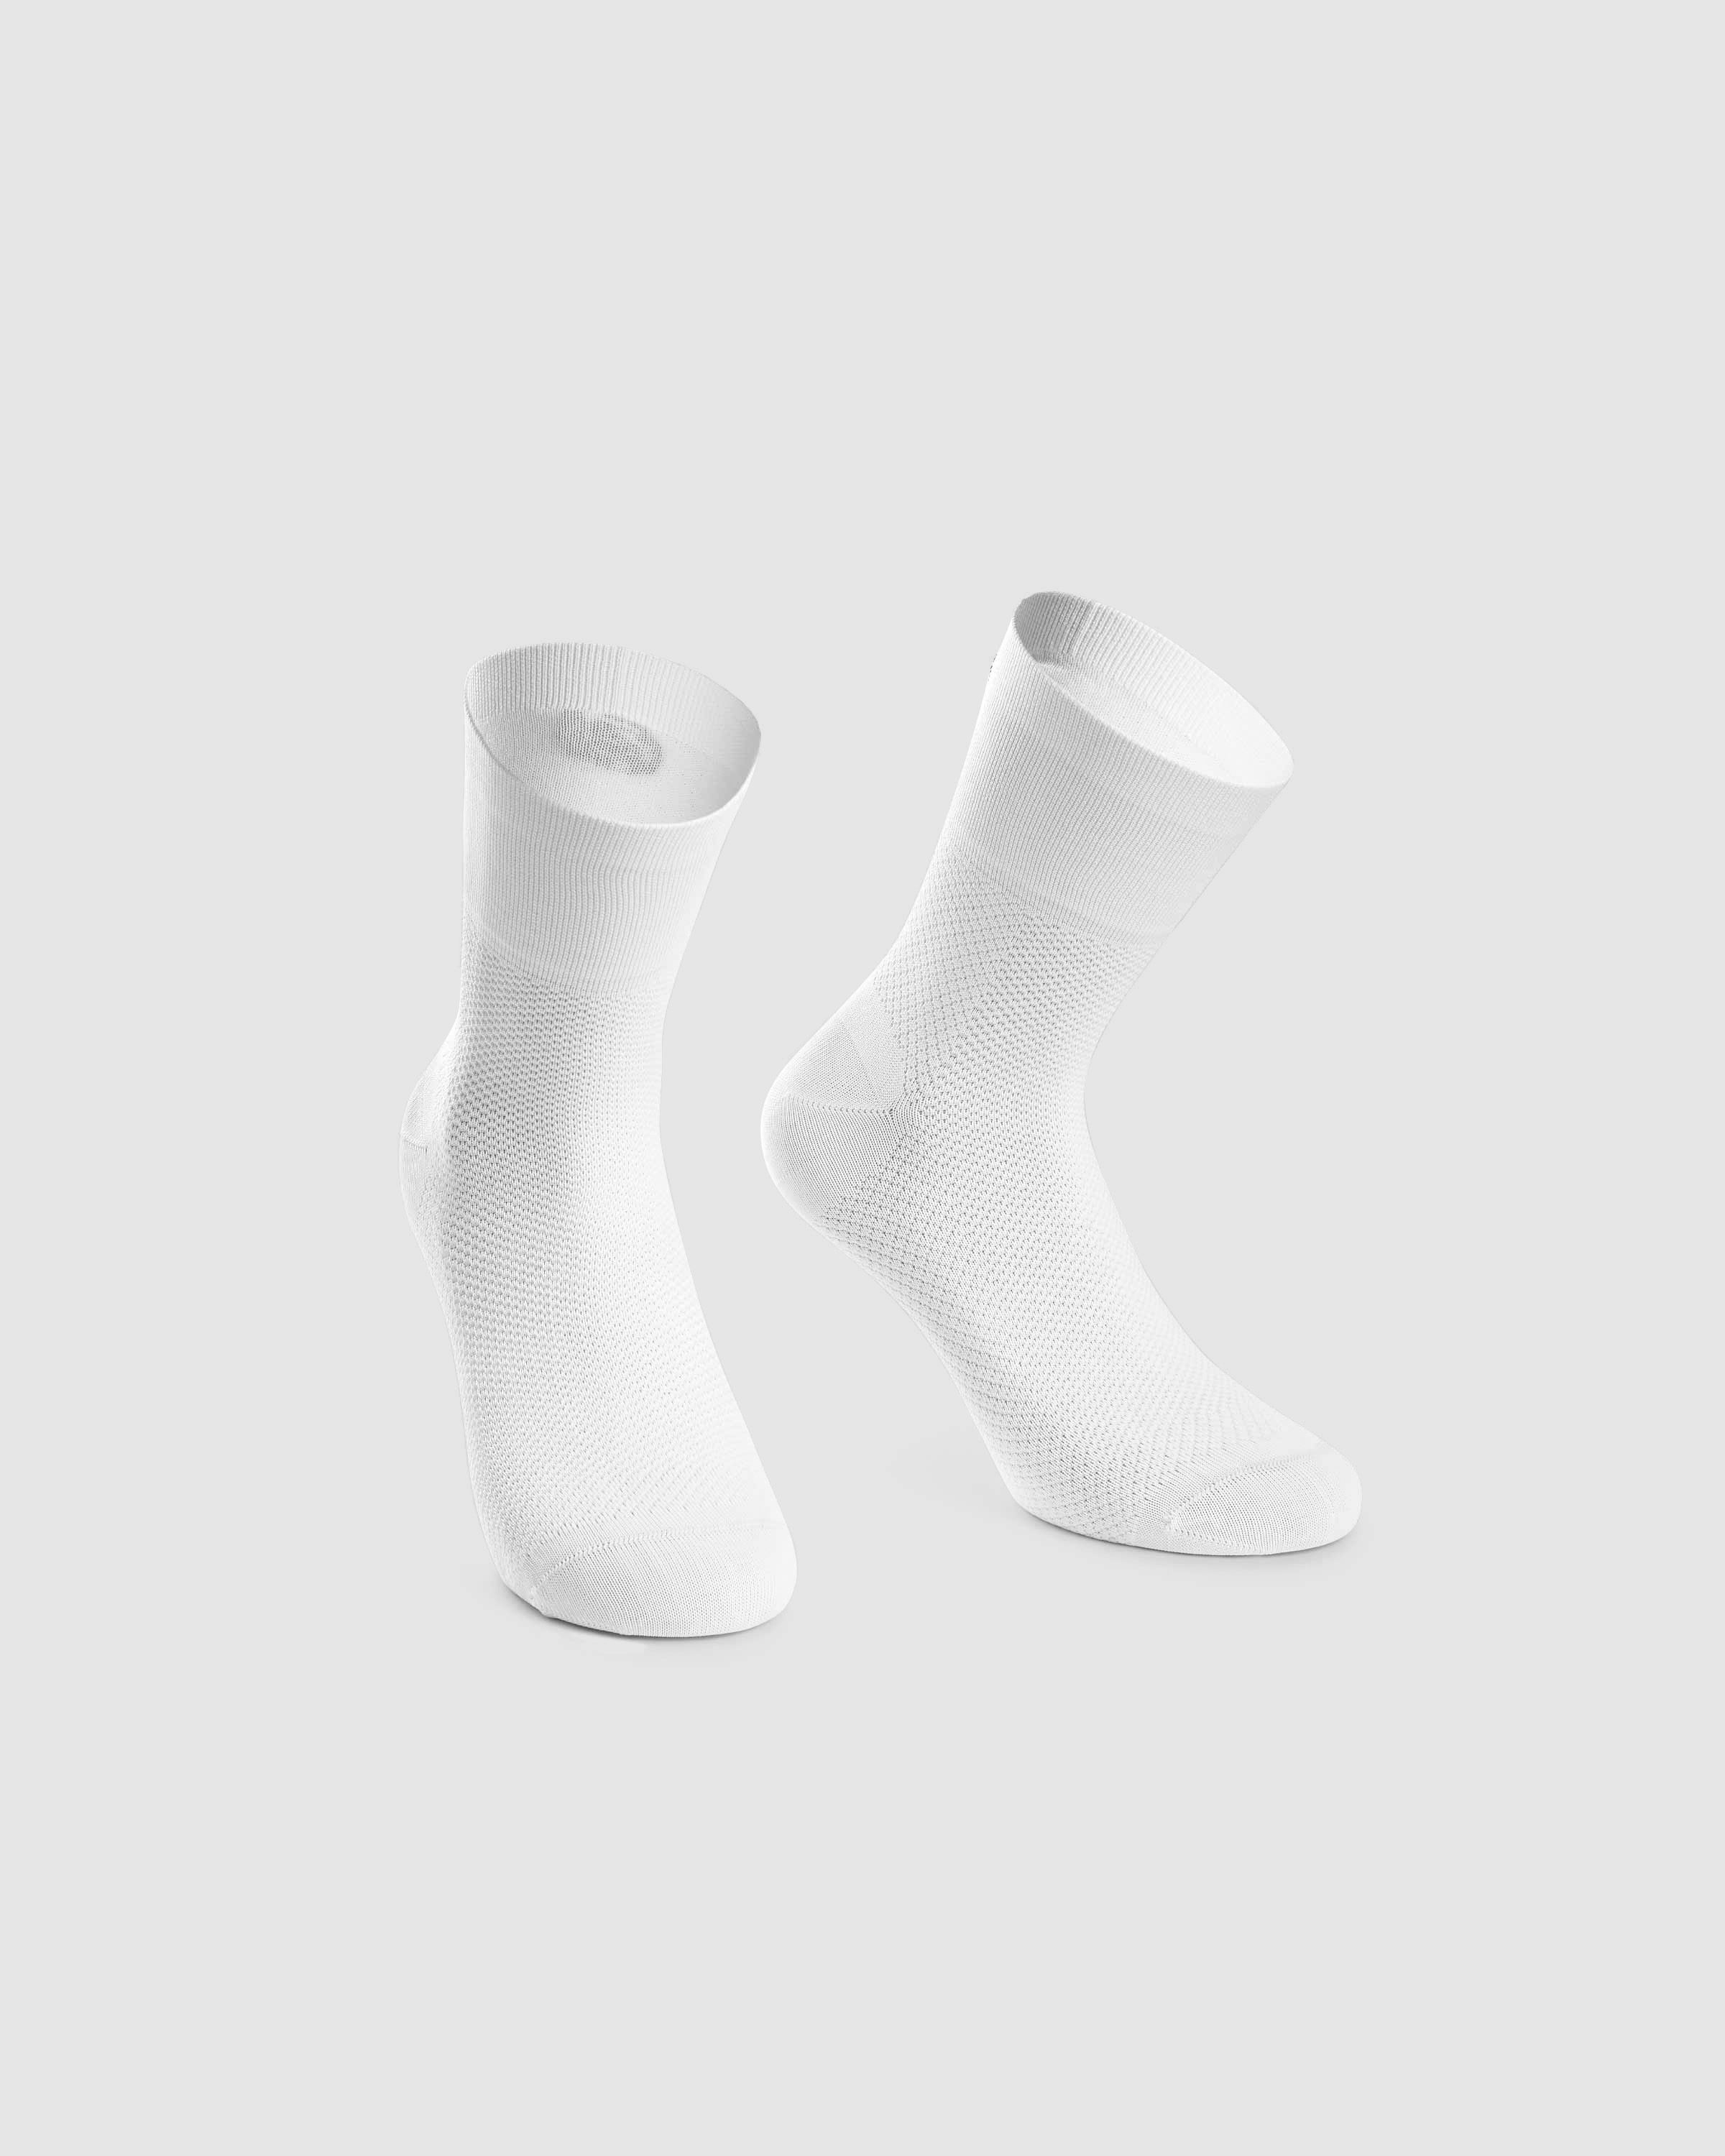 ASSOSOIRES GT socks - ASSOS Of Switzerland - Official Outlet